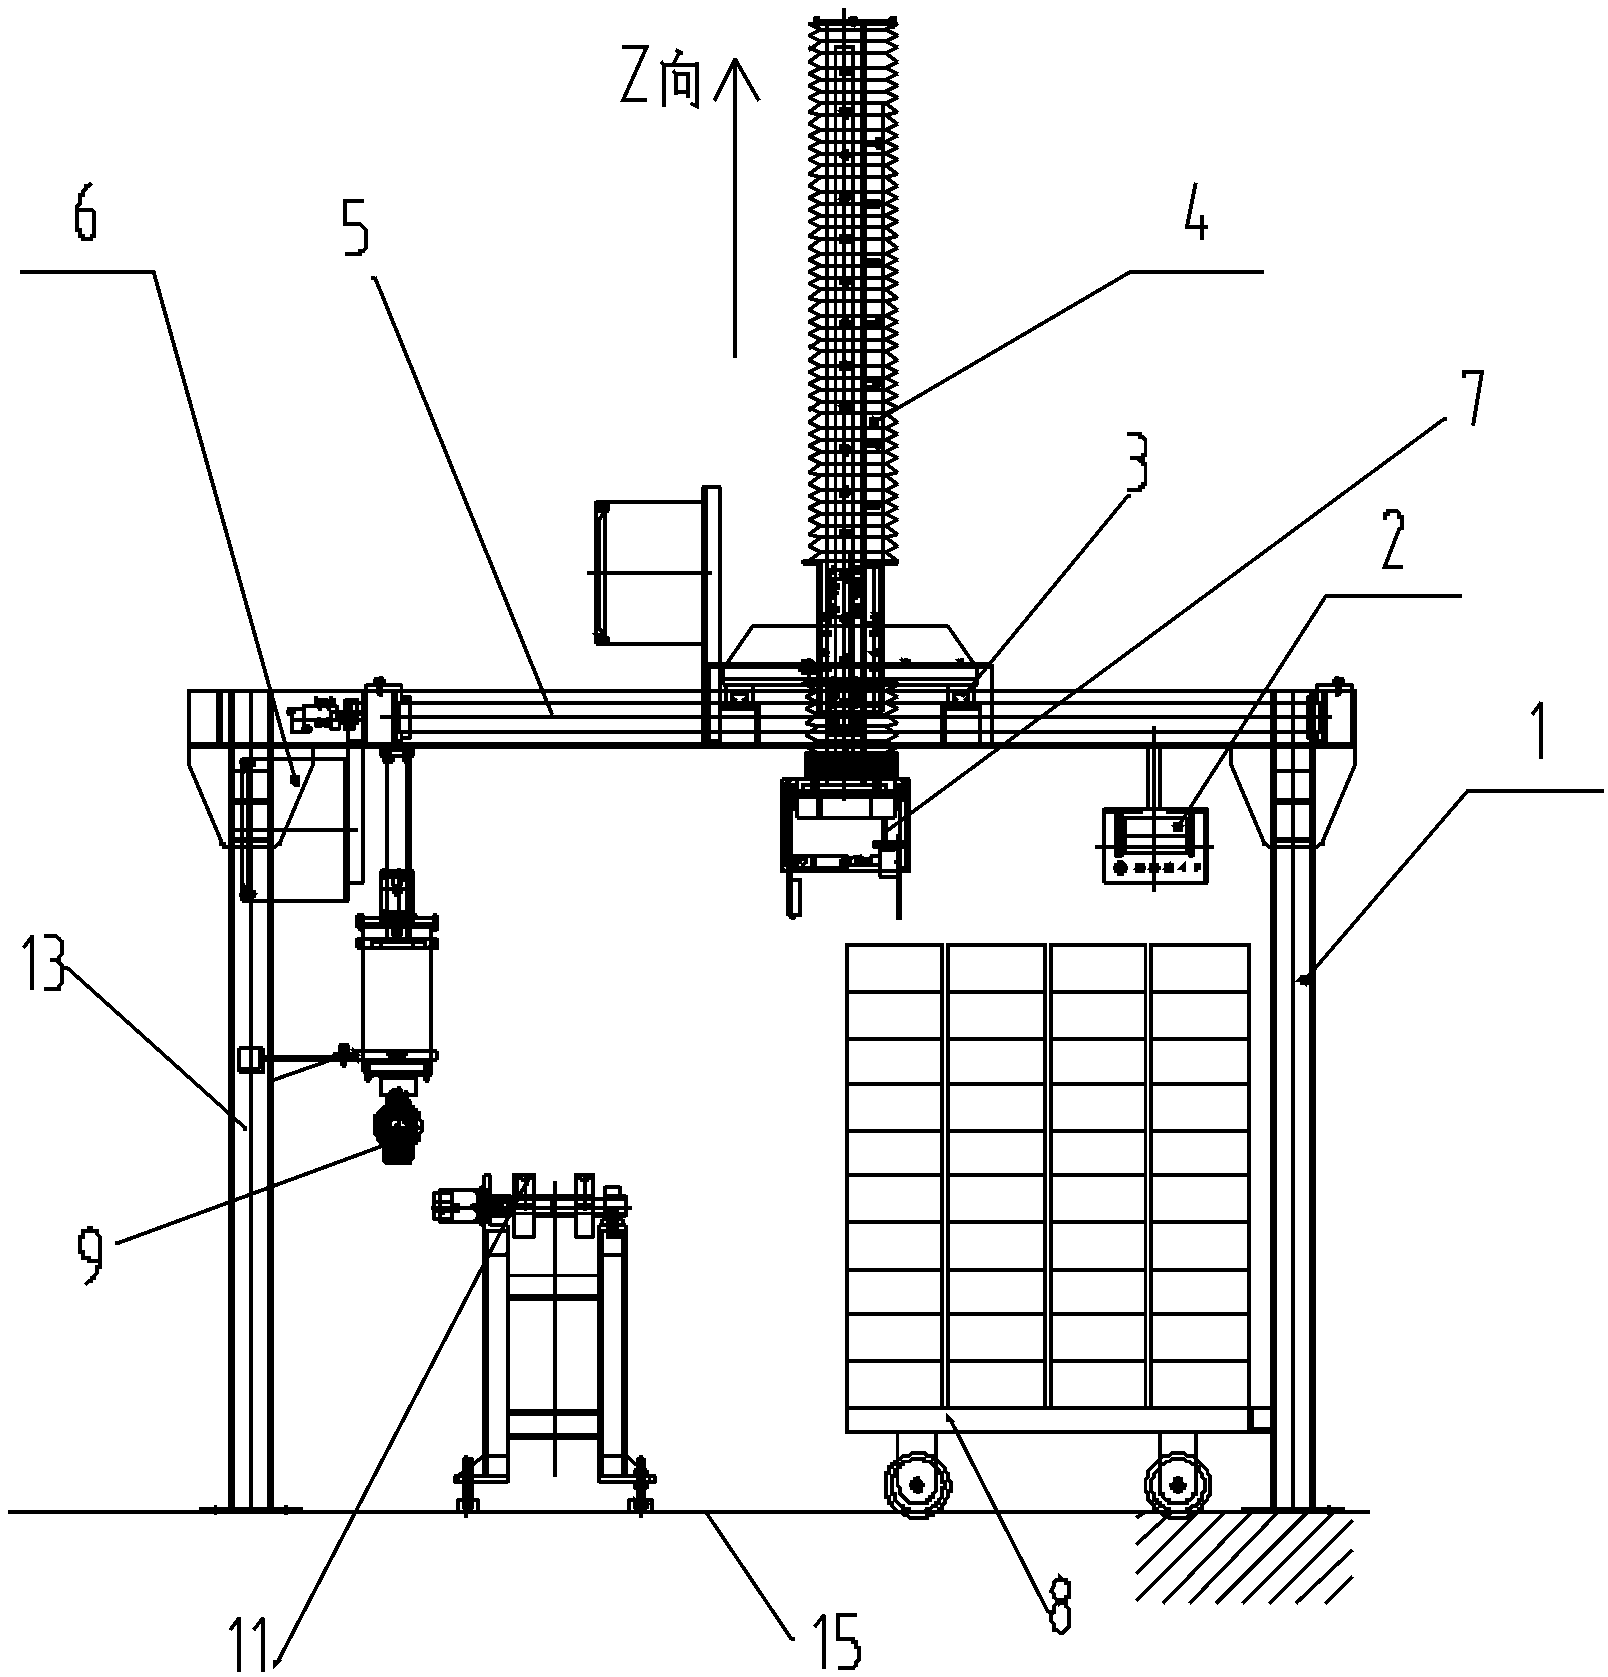 Air brick stacking manipulator system and control method